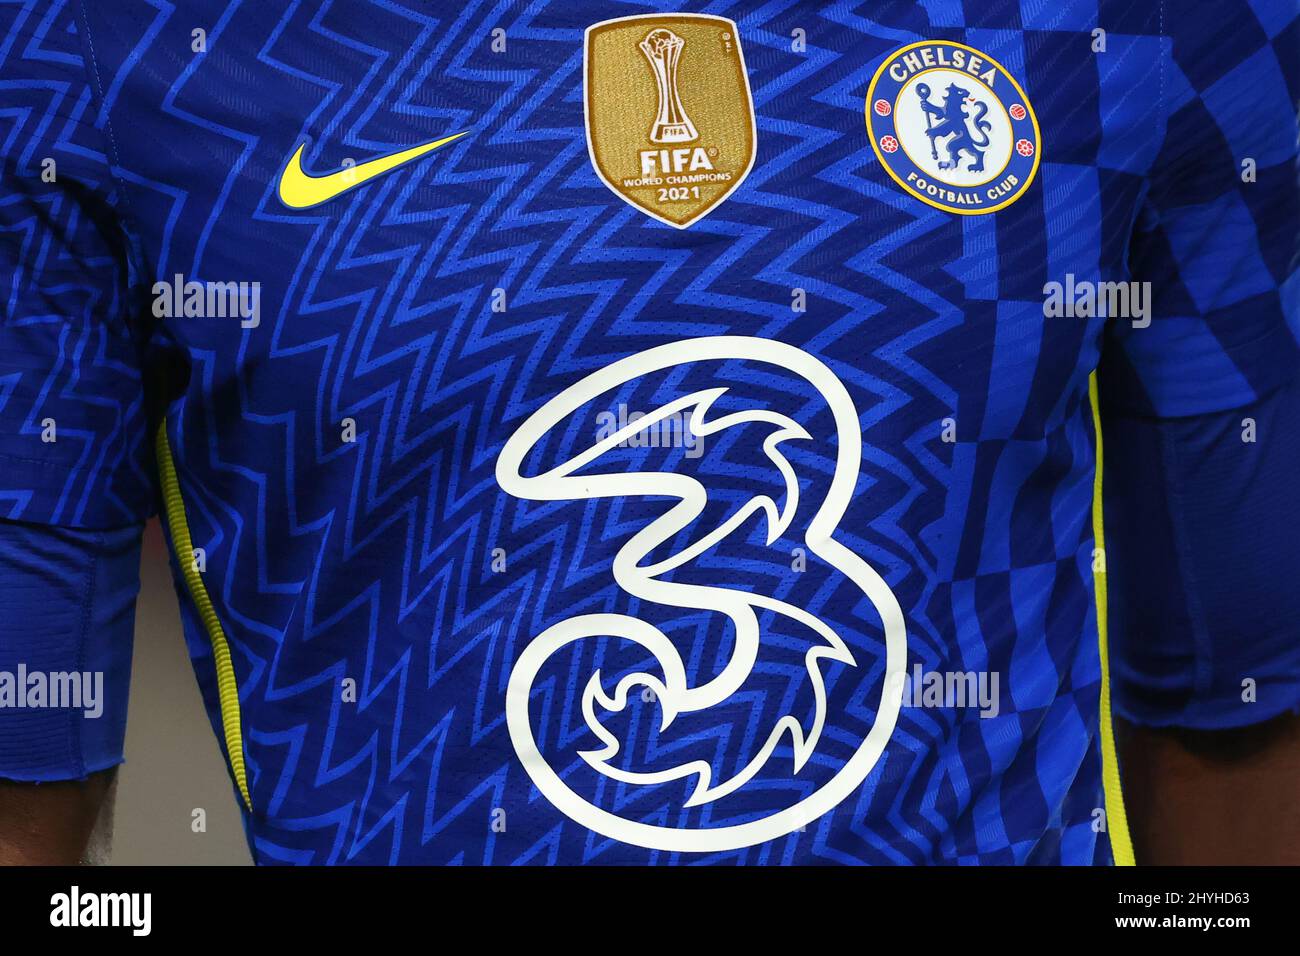 Chelsea sponsorise trois maillots, Kit Maker, Nike, FIFA World Champions et  Chelsea football Club badges - Norwich City v Chelsea, Premier League,  Carrow Road, Norwich, Royaume-Uni - 10th mars 2022 usage éditorial